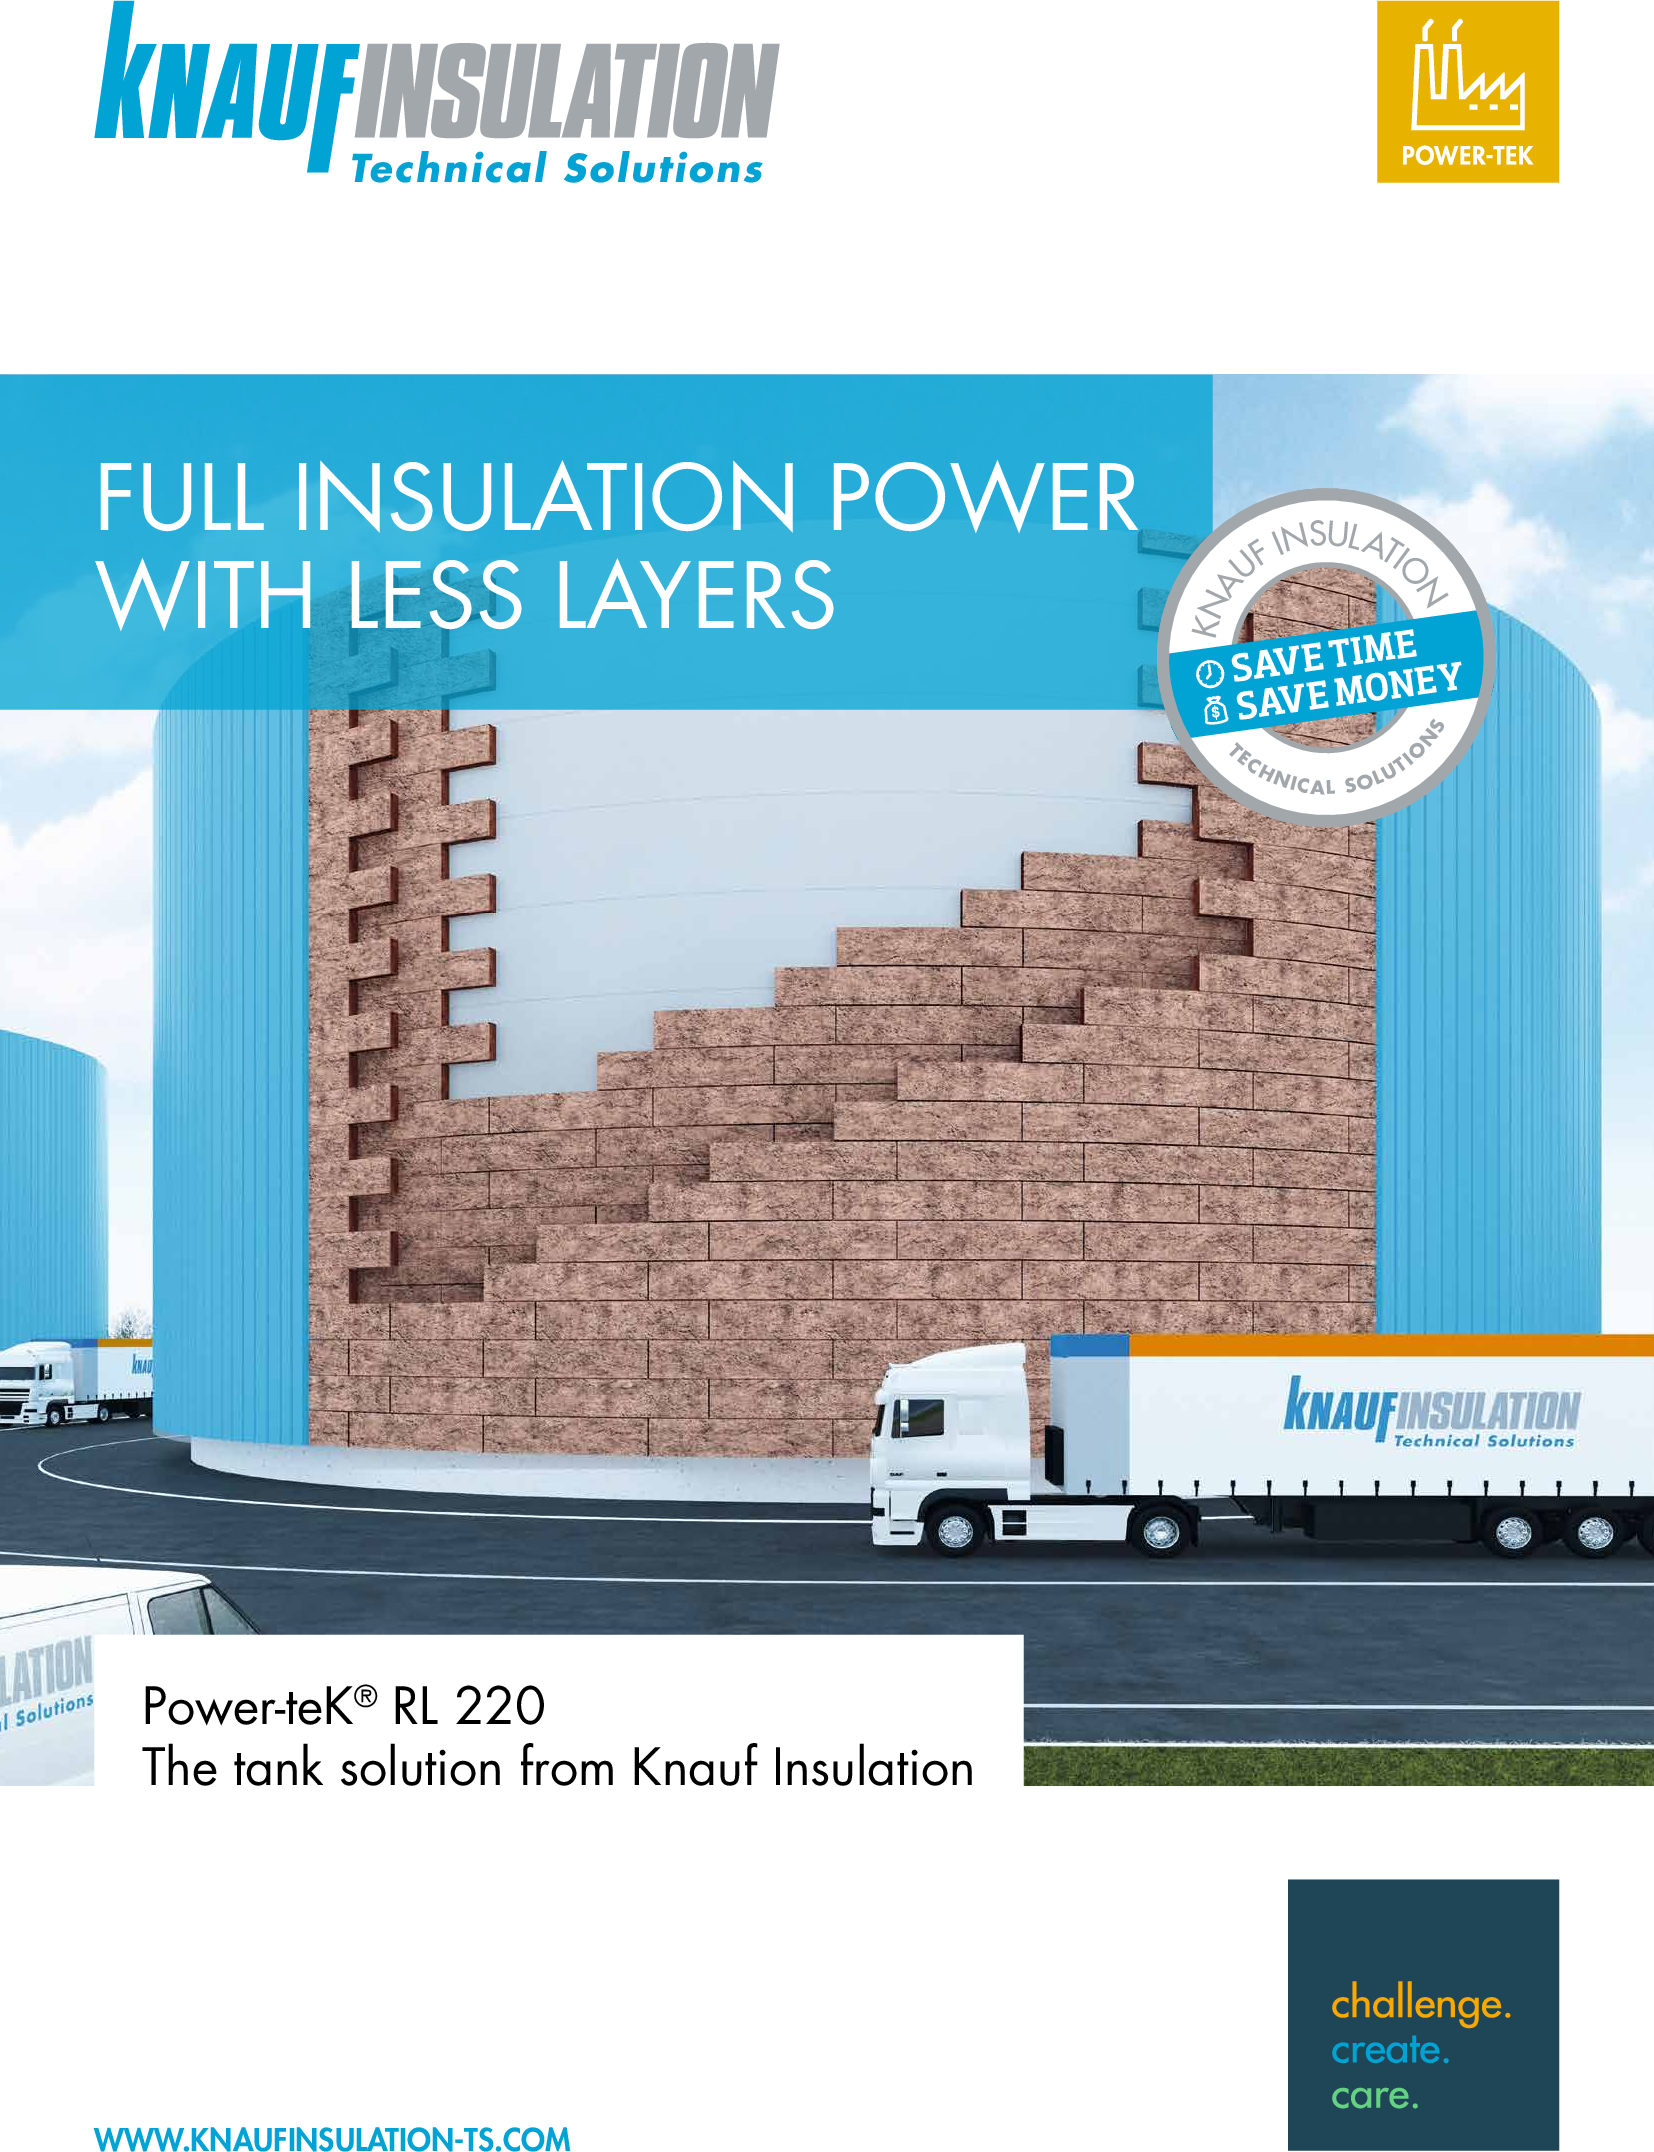 Power-teK RL 220 Full insulation power with less layers_flyer